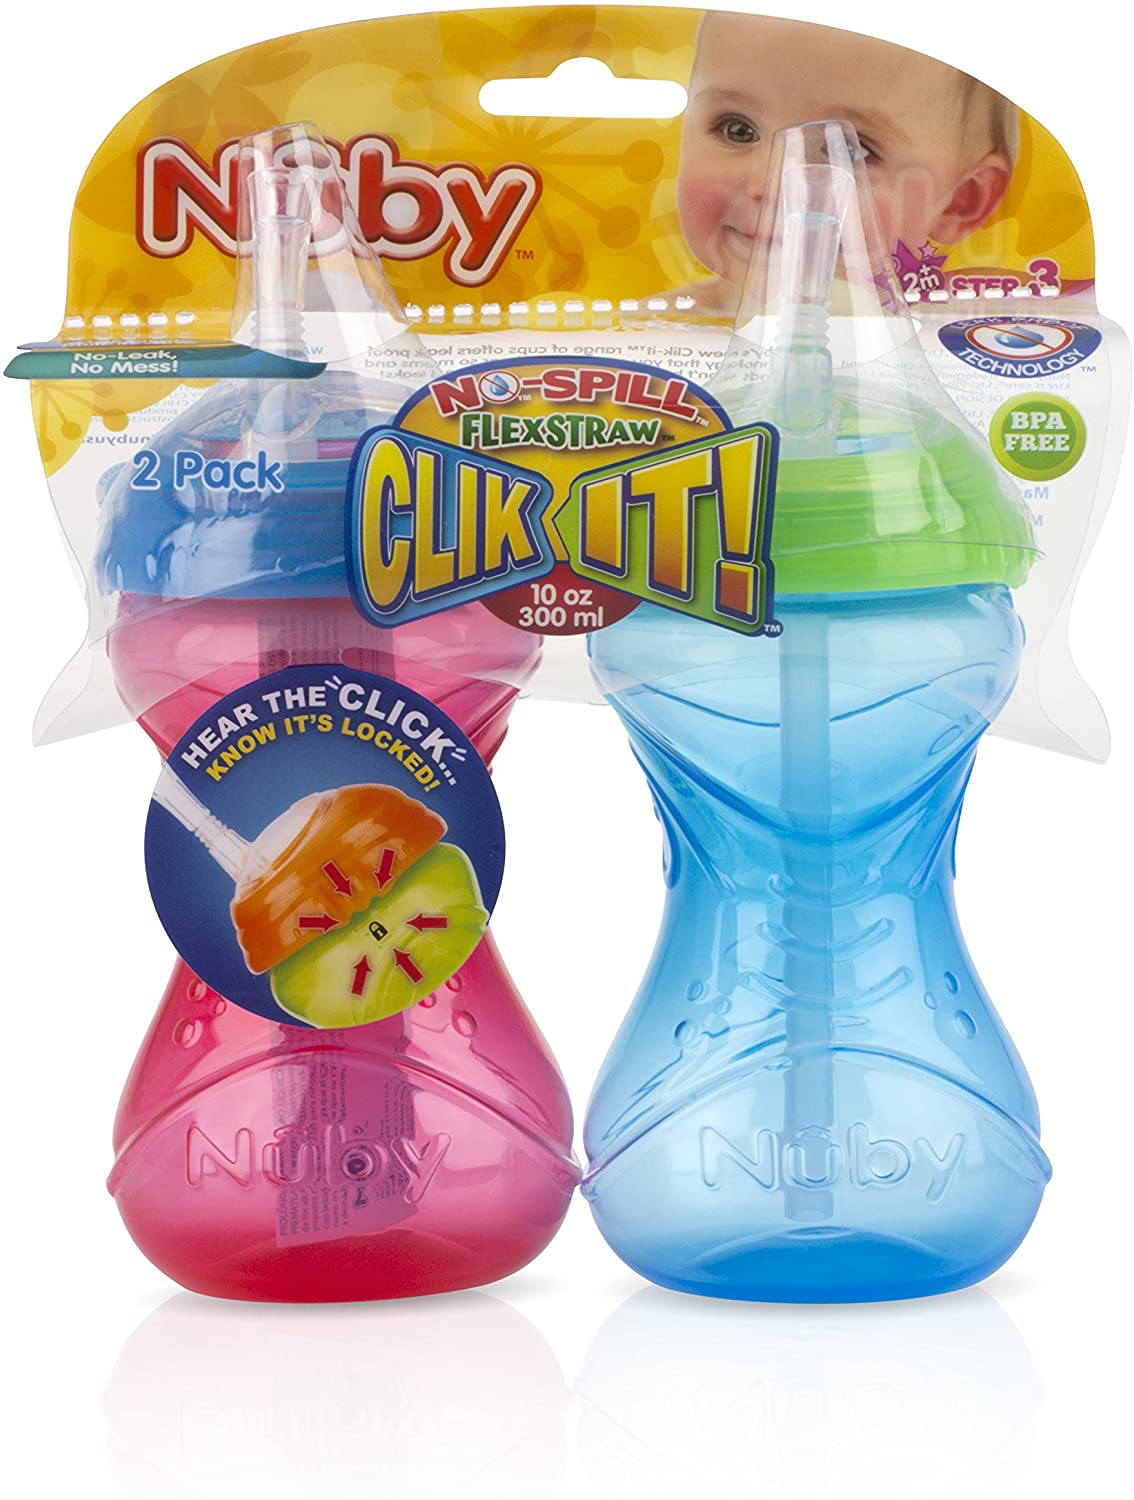 Nuby No-Spill Clik-It Flex Straw Cup, 12 Months Plus